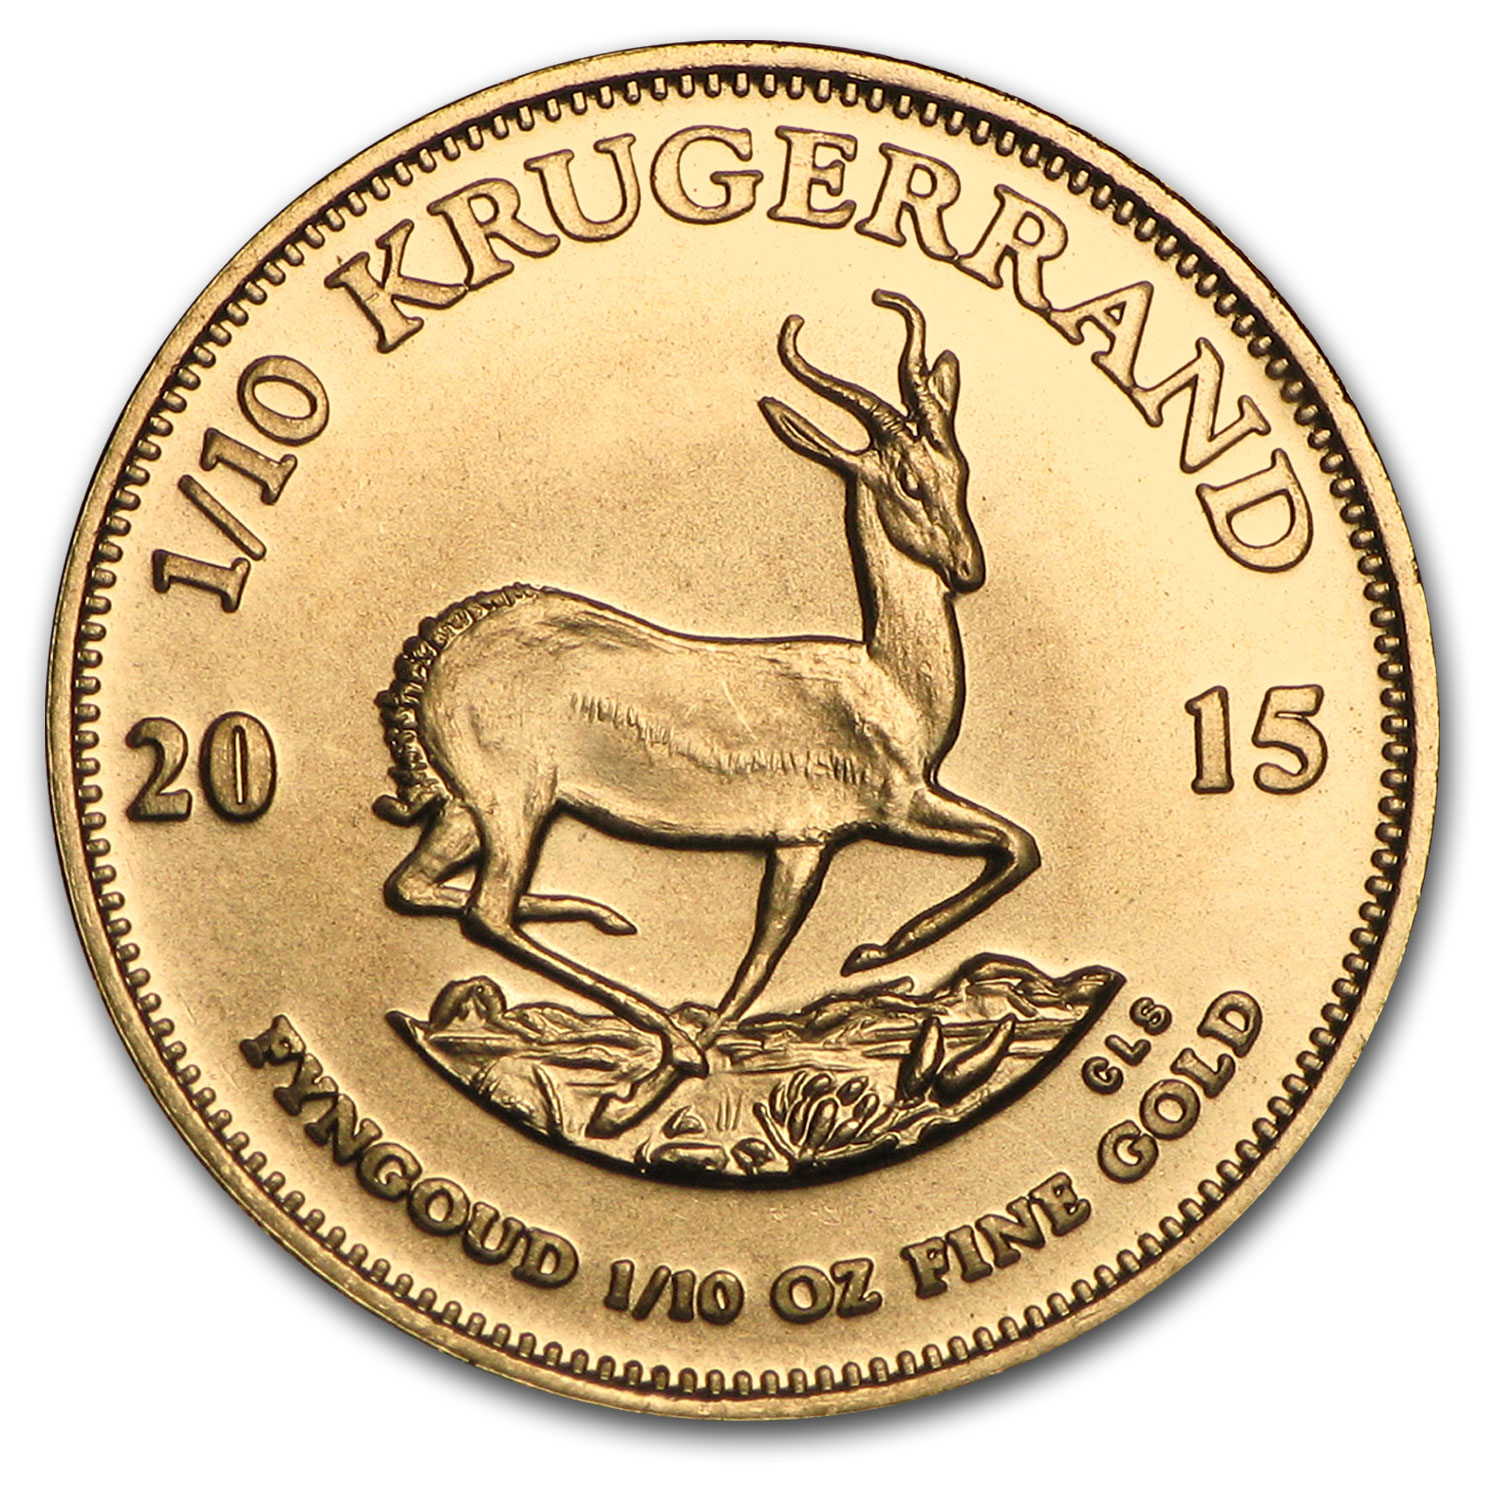 Buy 2015 South Africa 1/10 oz Gold Krugerrand - Click Image to Close